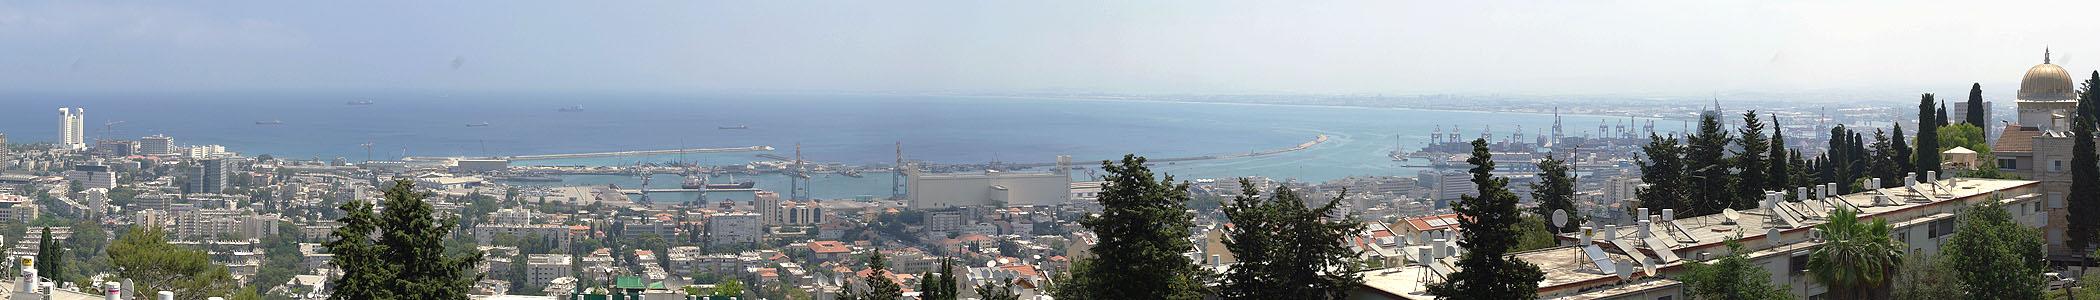 Banner image for Haifa on GigsGuide